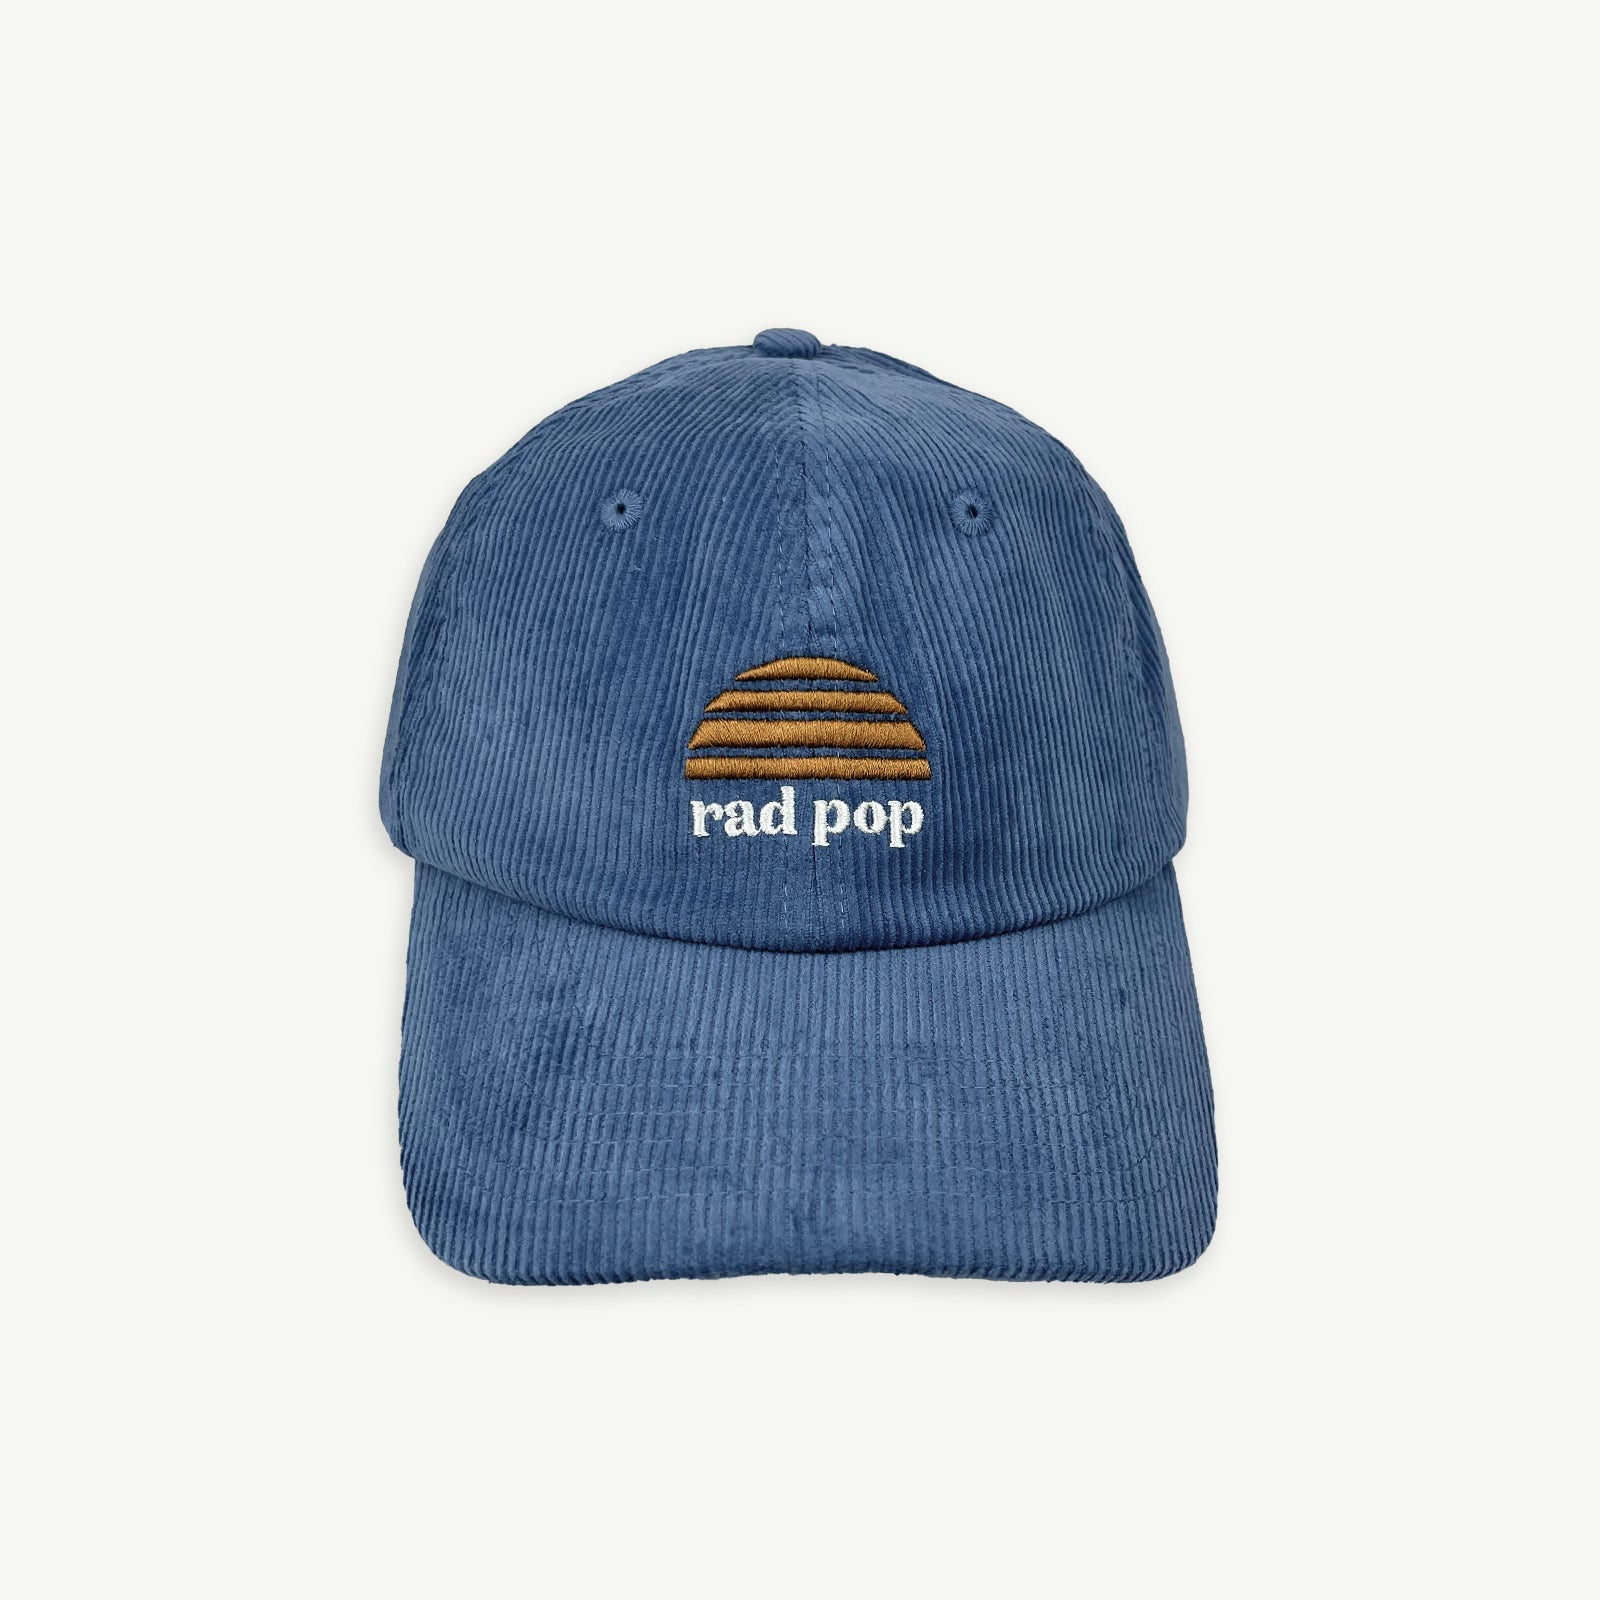 Rad Pop Cord Cap - Denim Blue